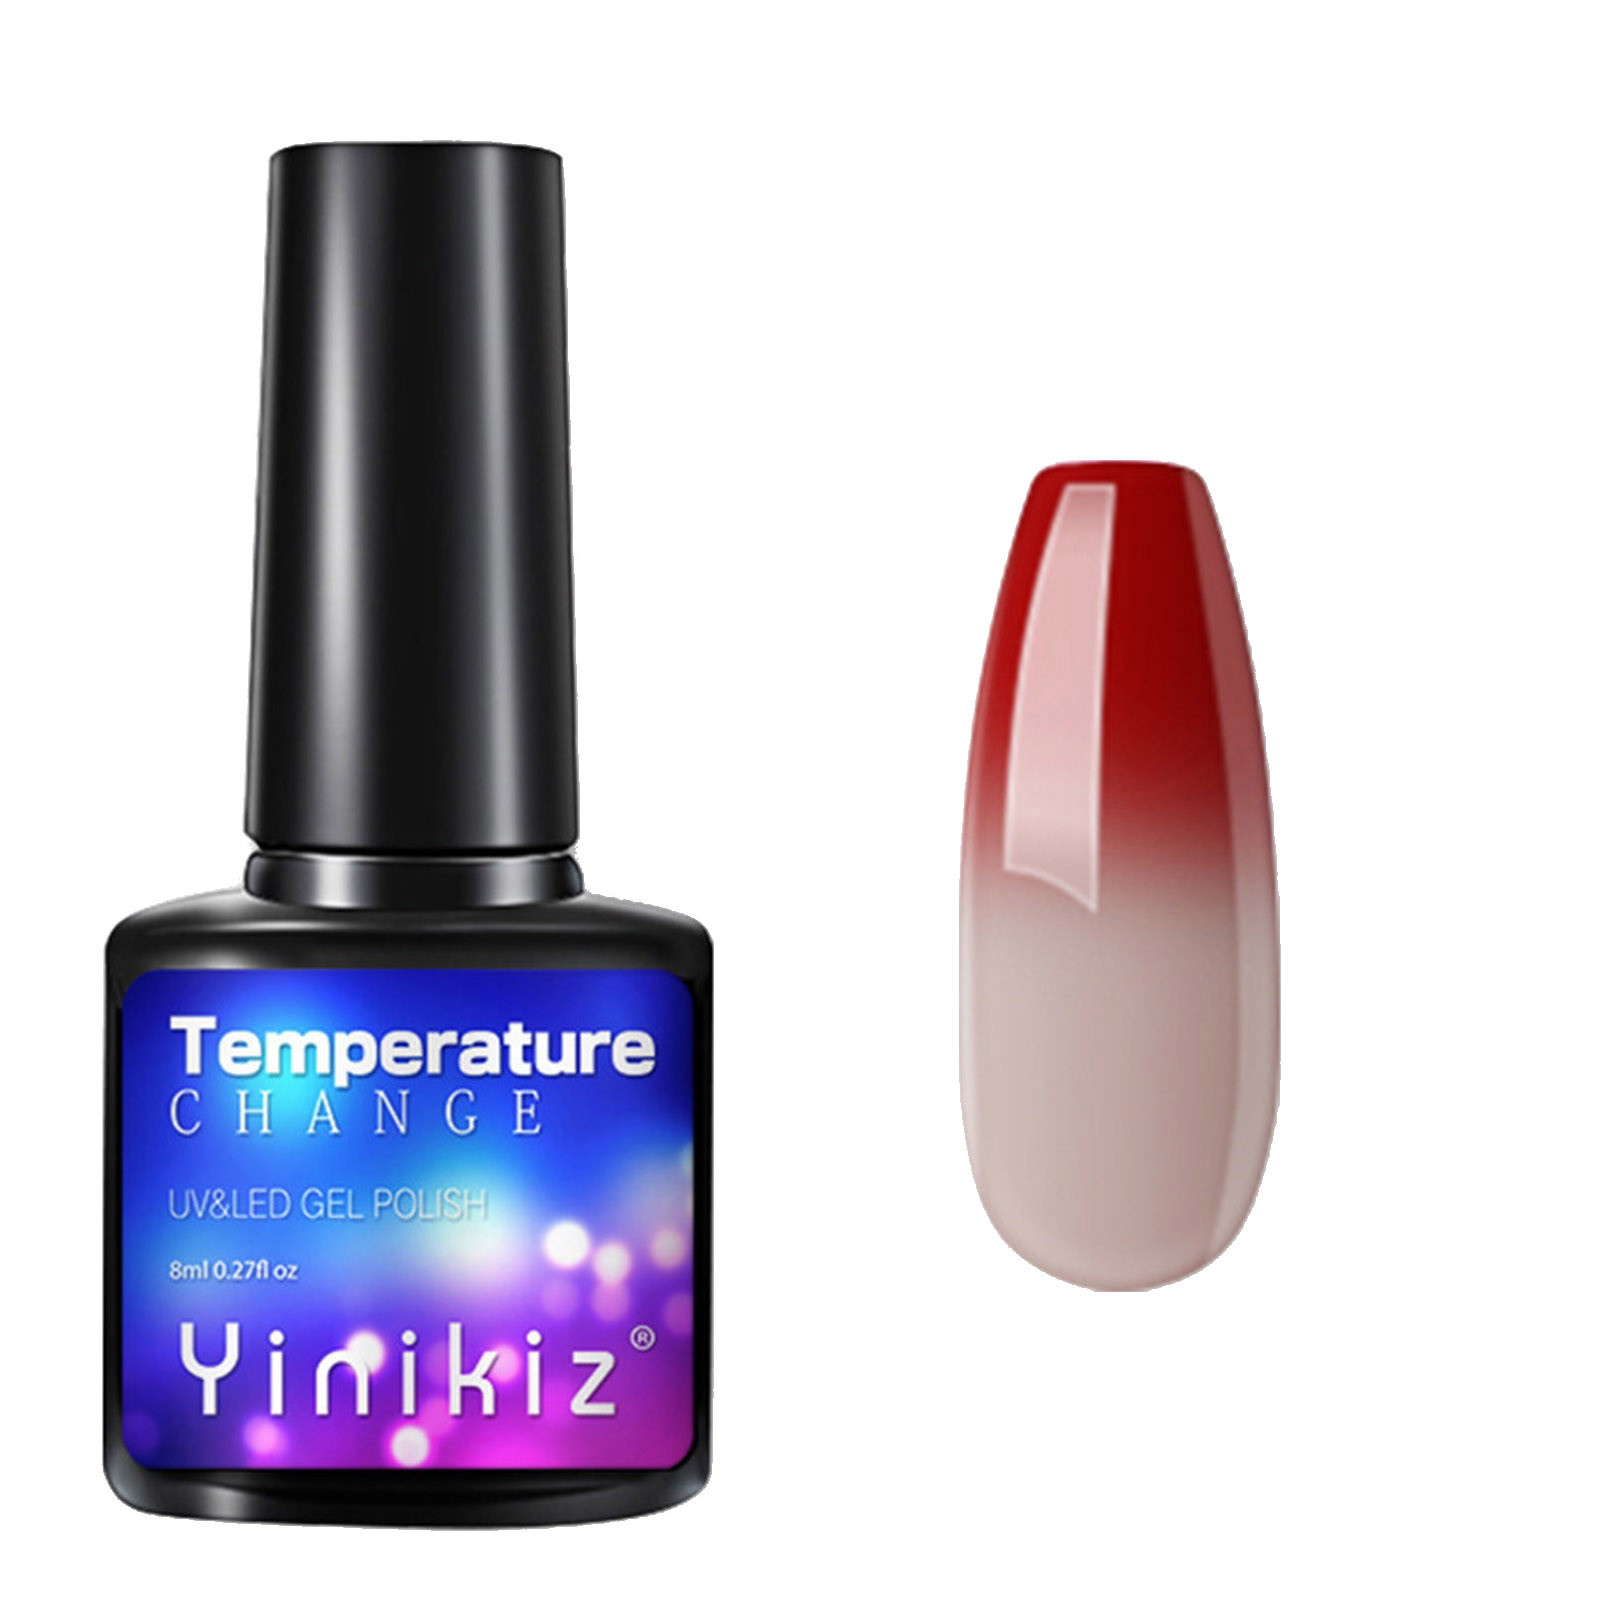 Tejiojio HoliDay Home Trends Temperature Change Nail Glue Gradient Phototherapy Nail Polish Glue Tool 8ml - image 2 of 2